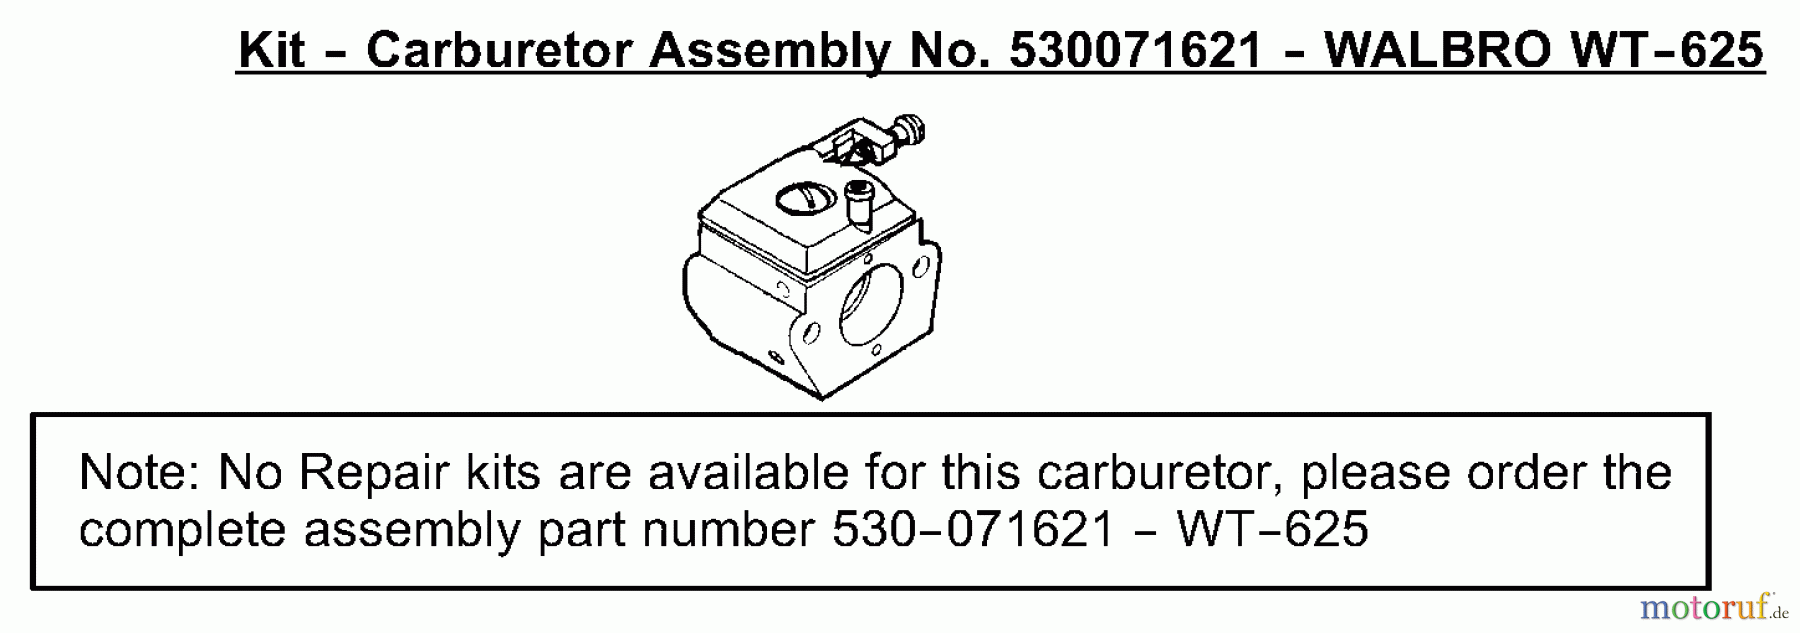  Poulan / Weed Eater Motorsägen PP221 (Type 1) - Poulan Pro Chainsaw Carburetor Assembly (Walbro WT625) 530071621